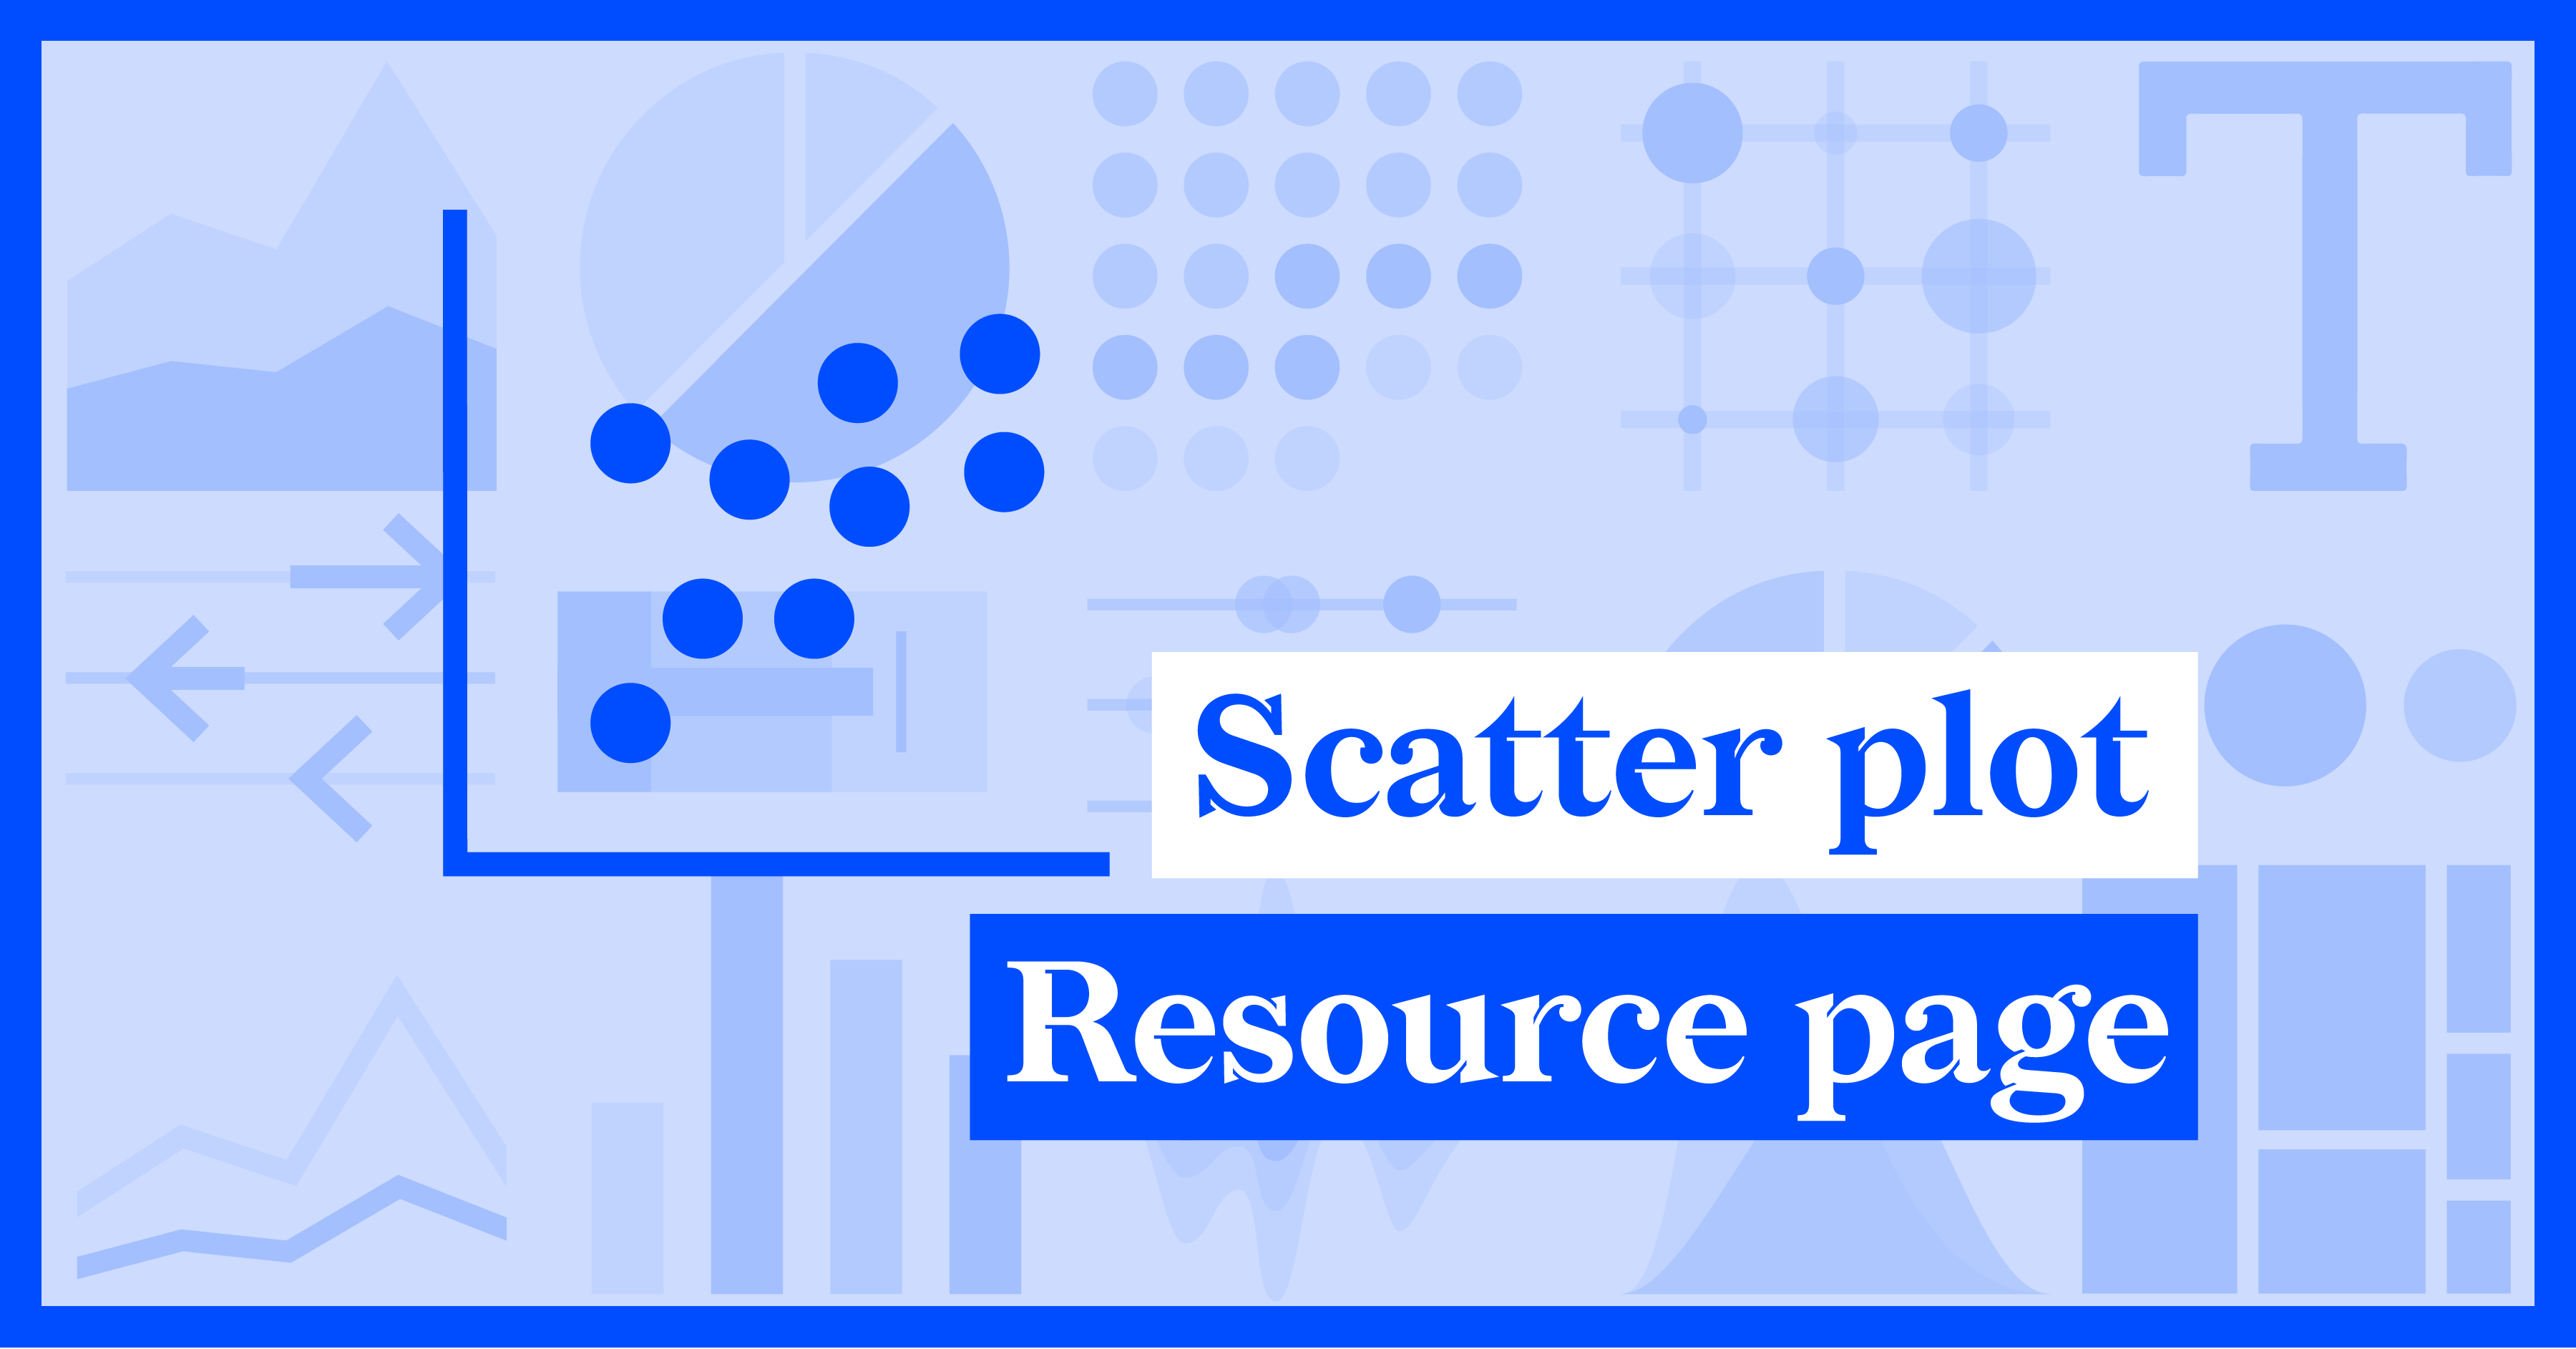 Scatterplot resource page: scatterplot definition, scatterplot alternatives, scatter plot variations and pro tips for scatterplot design